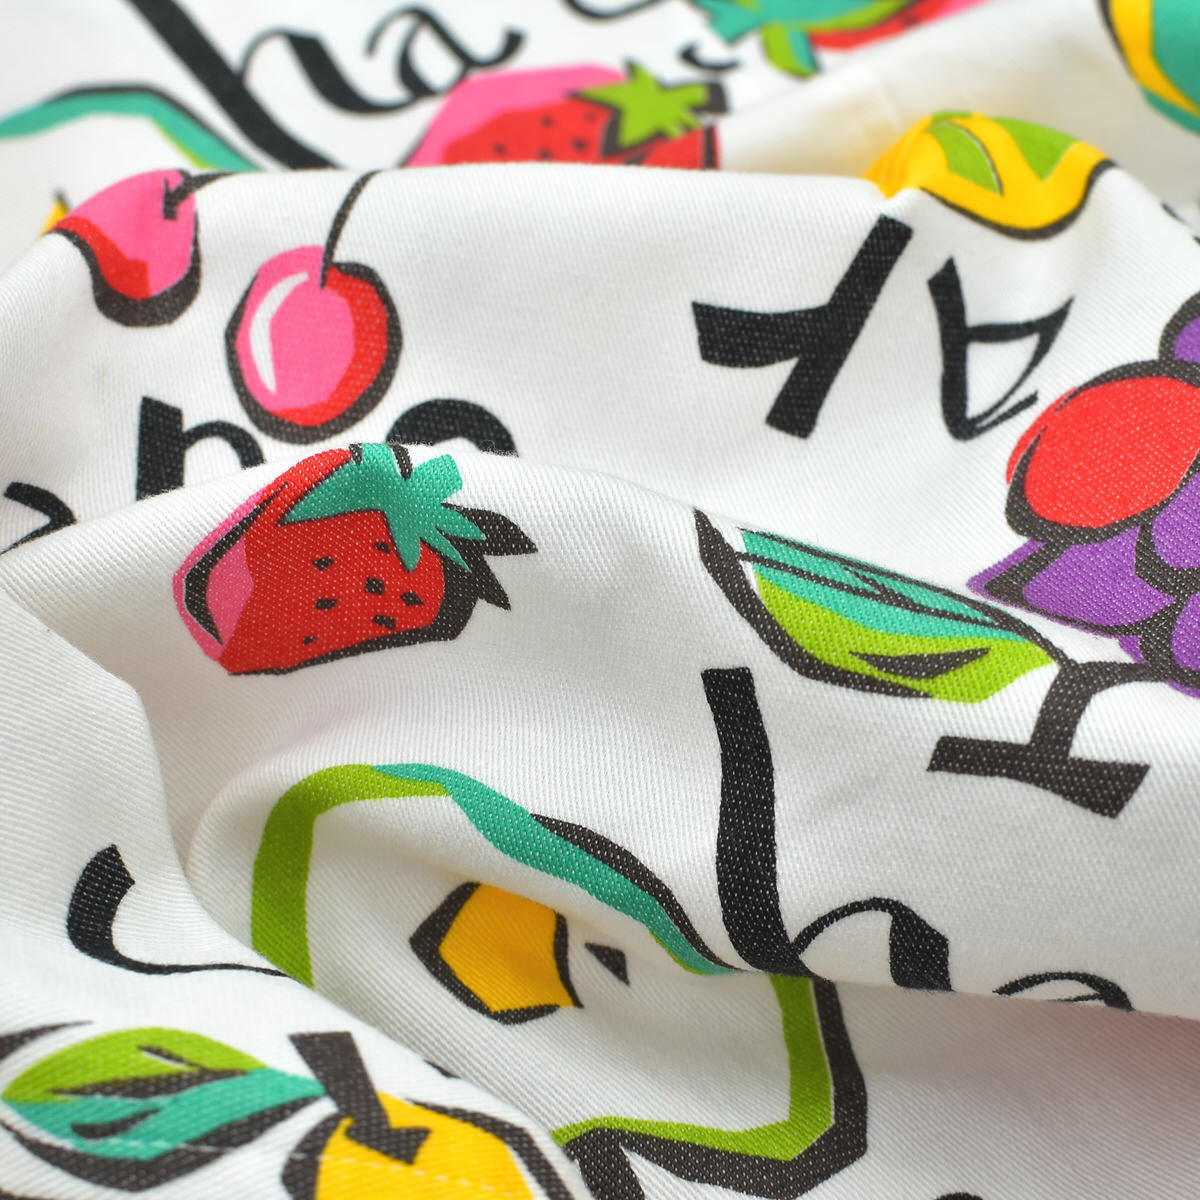 Deformation collar pop art fruit print shirt jktレディース M相当 ポップ デザイン フルーツ 総柄_画像10